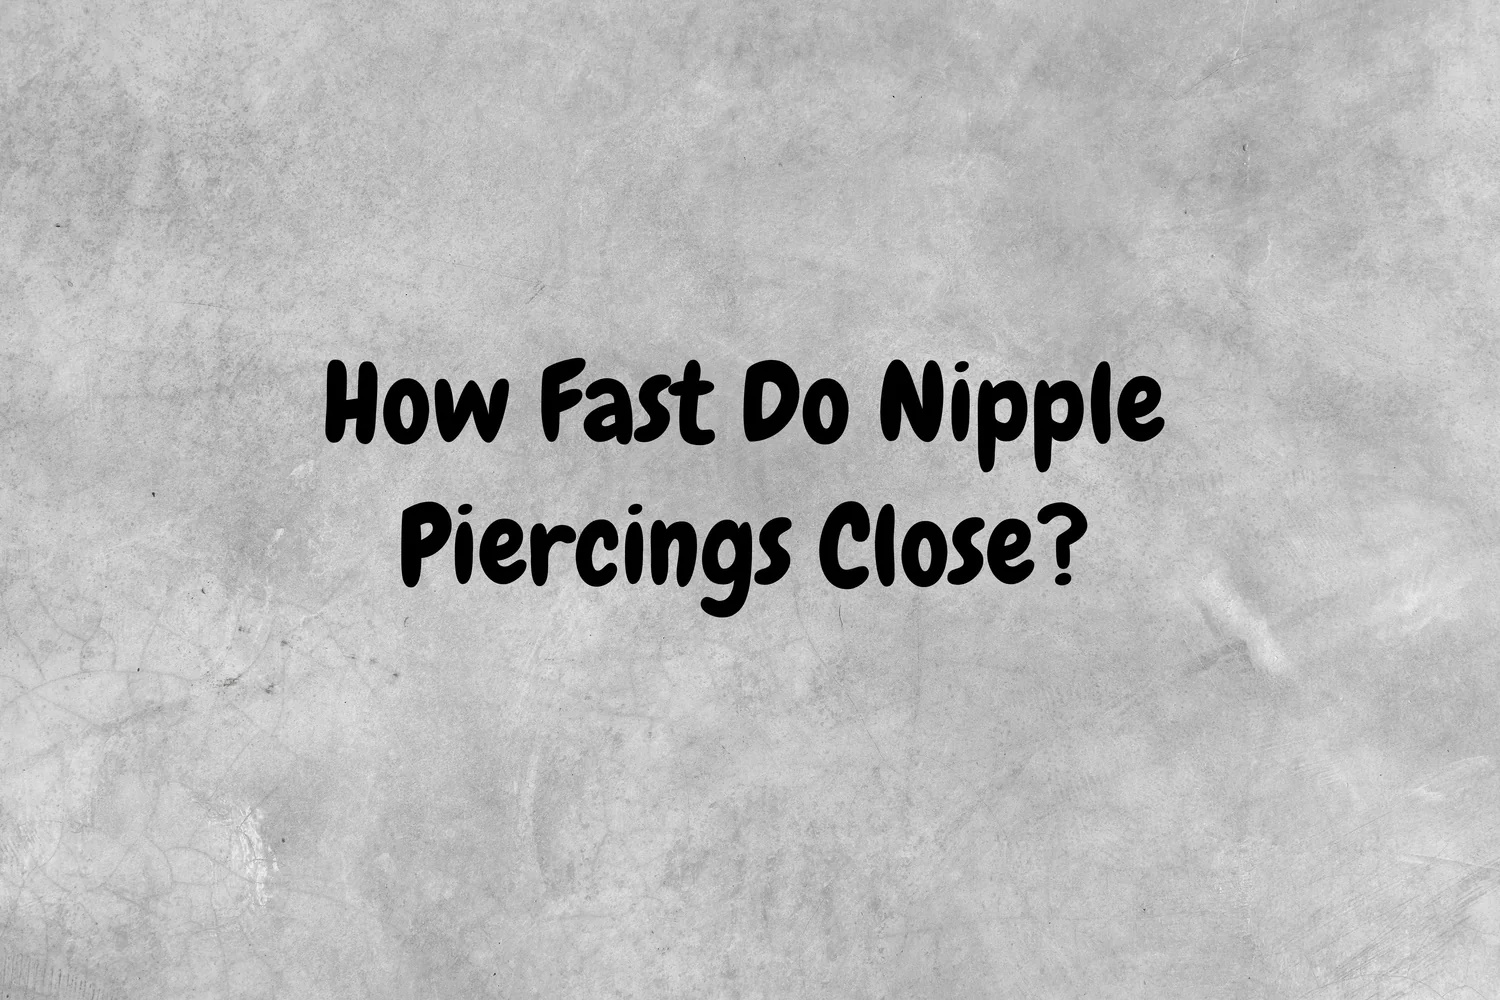 How Fast Do Nipple Piercings Close?